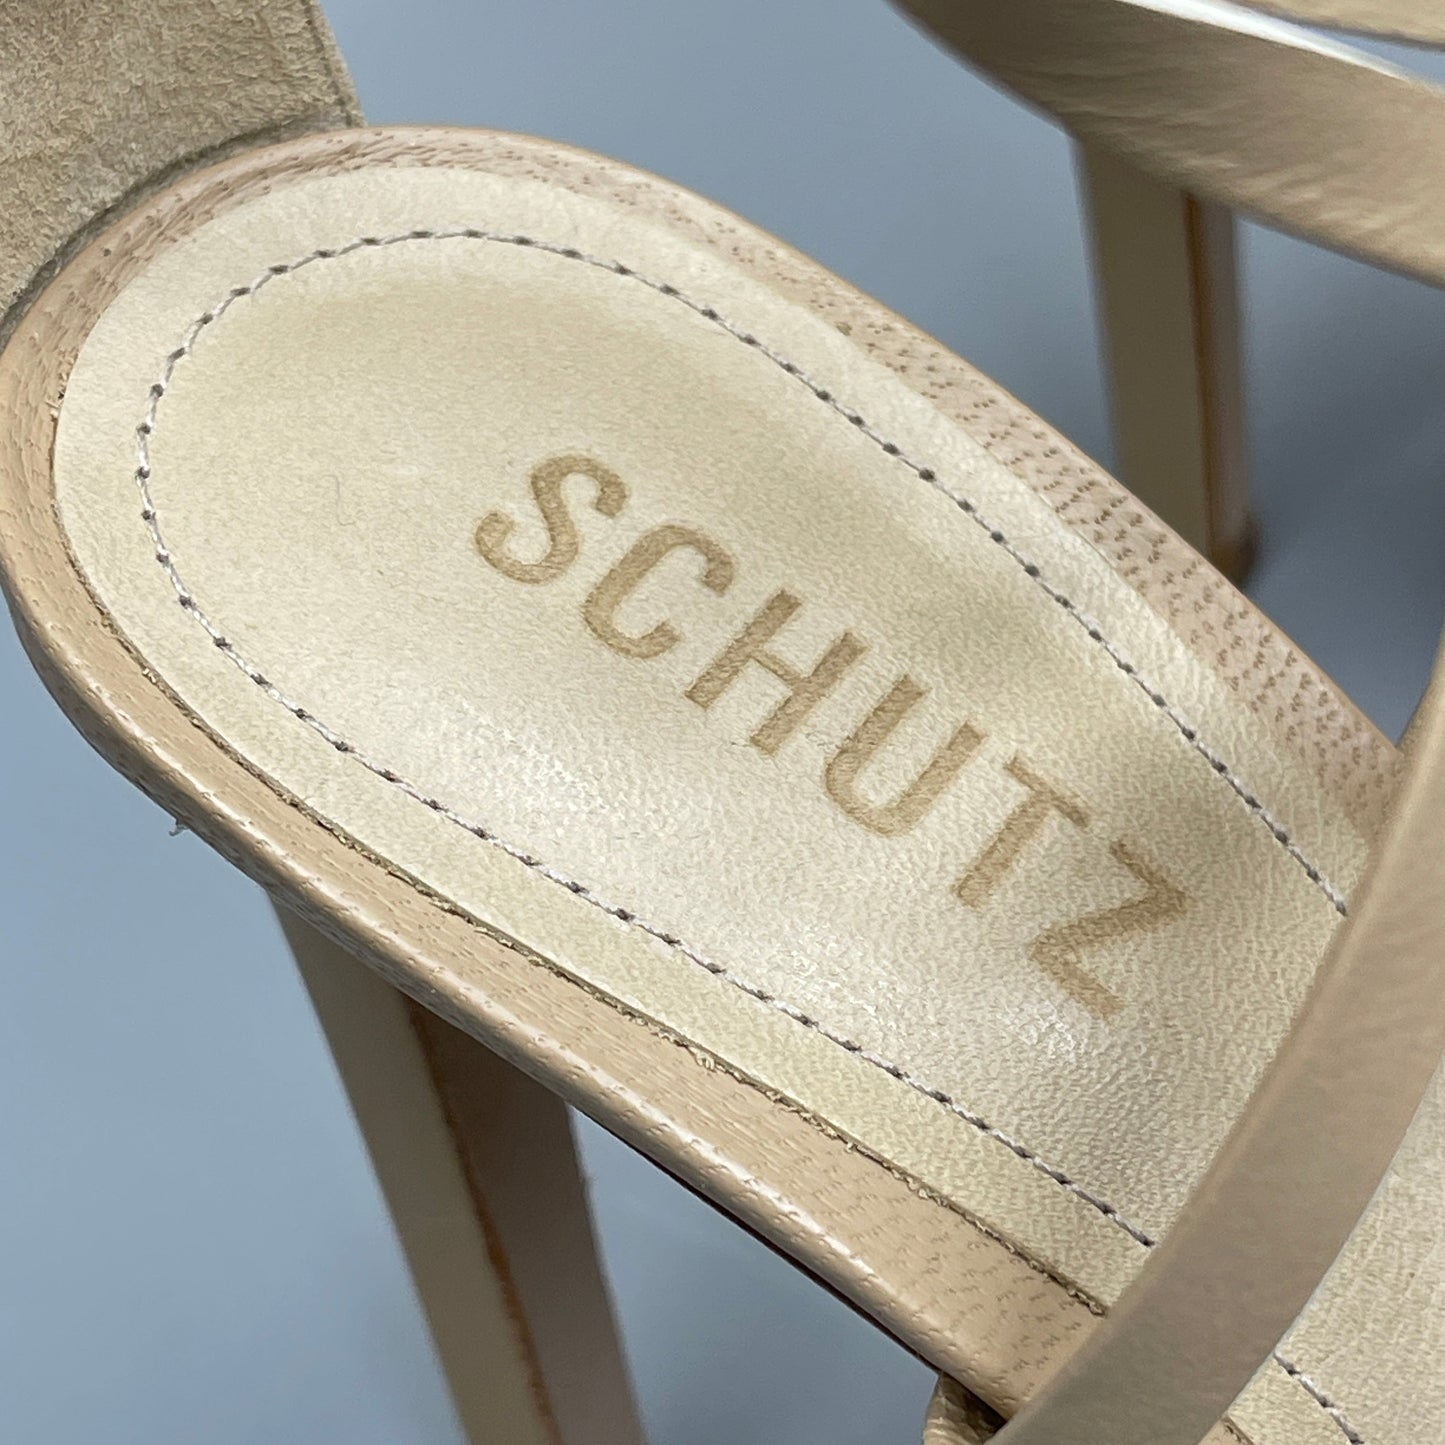 SCHUTZ Bryce Ankle Tie Women's Leather High Heel Strappy Sandal Light Nude Sz 6.5B (New)